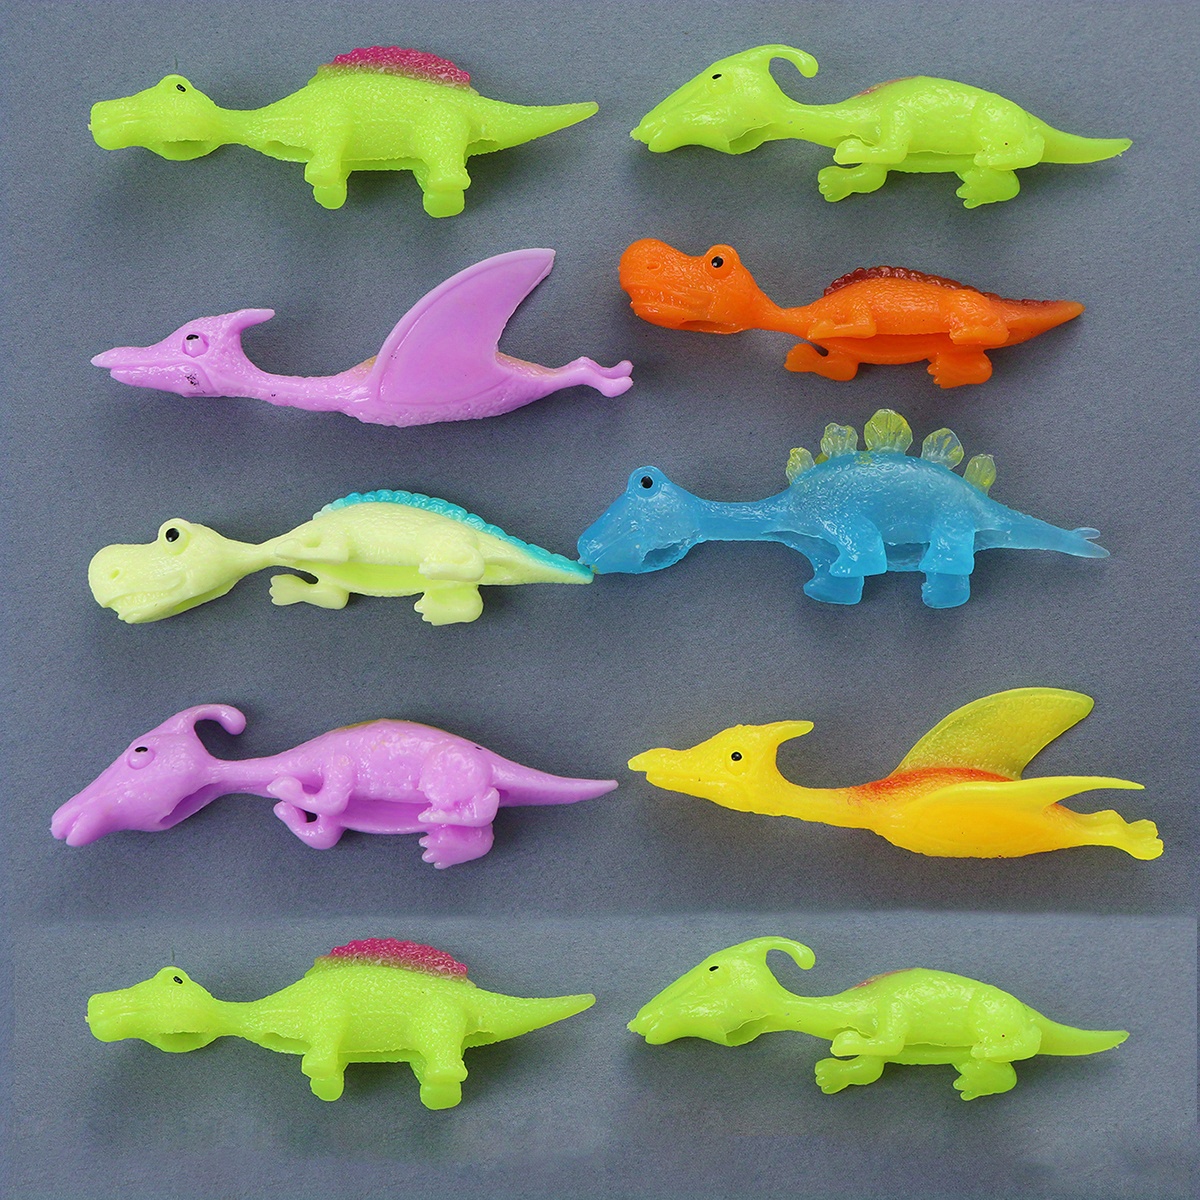 10pcs Slingshot Dinosaur Finger Toys,Dinosaur Finger Slingshot,Mini Rubber  Flying Dinosaur Toys